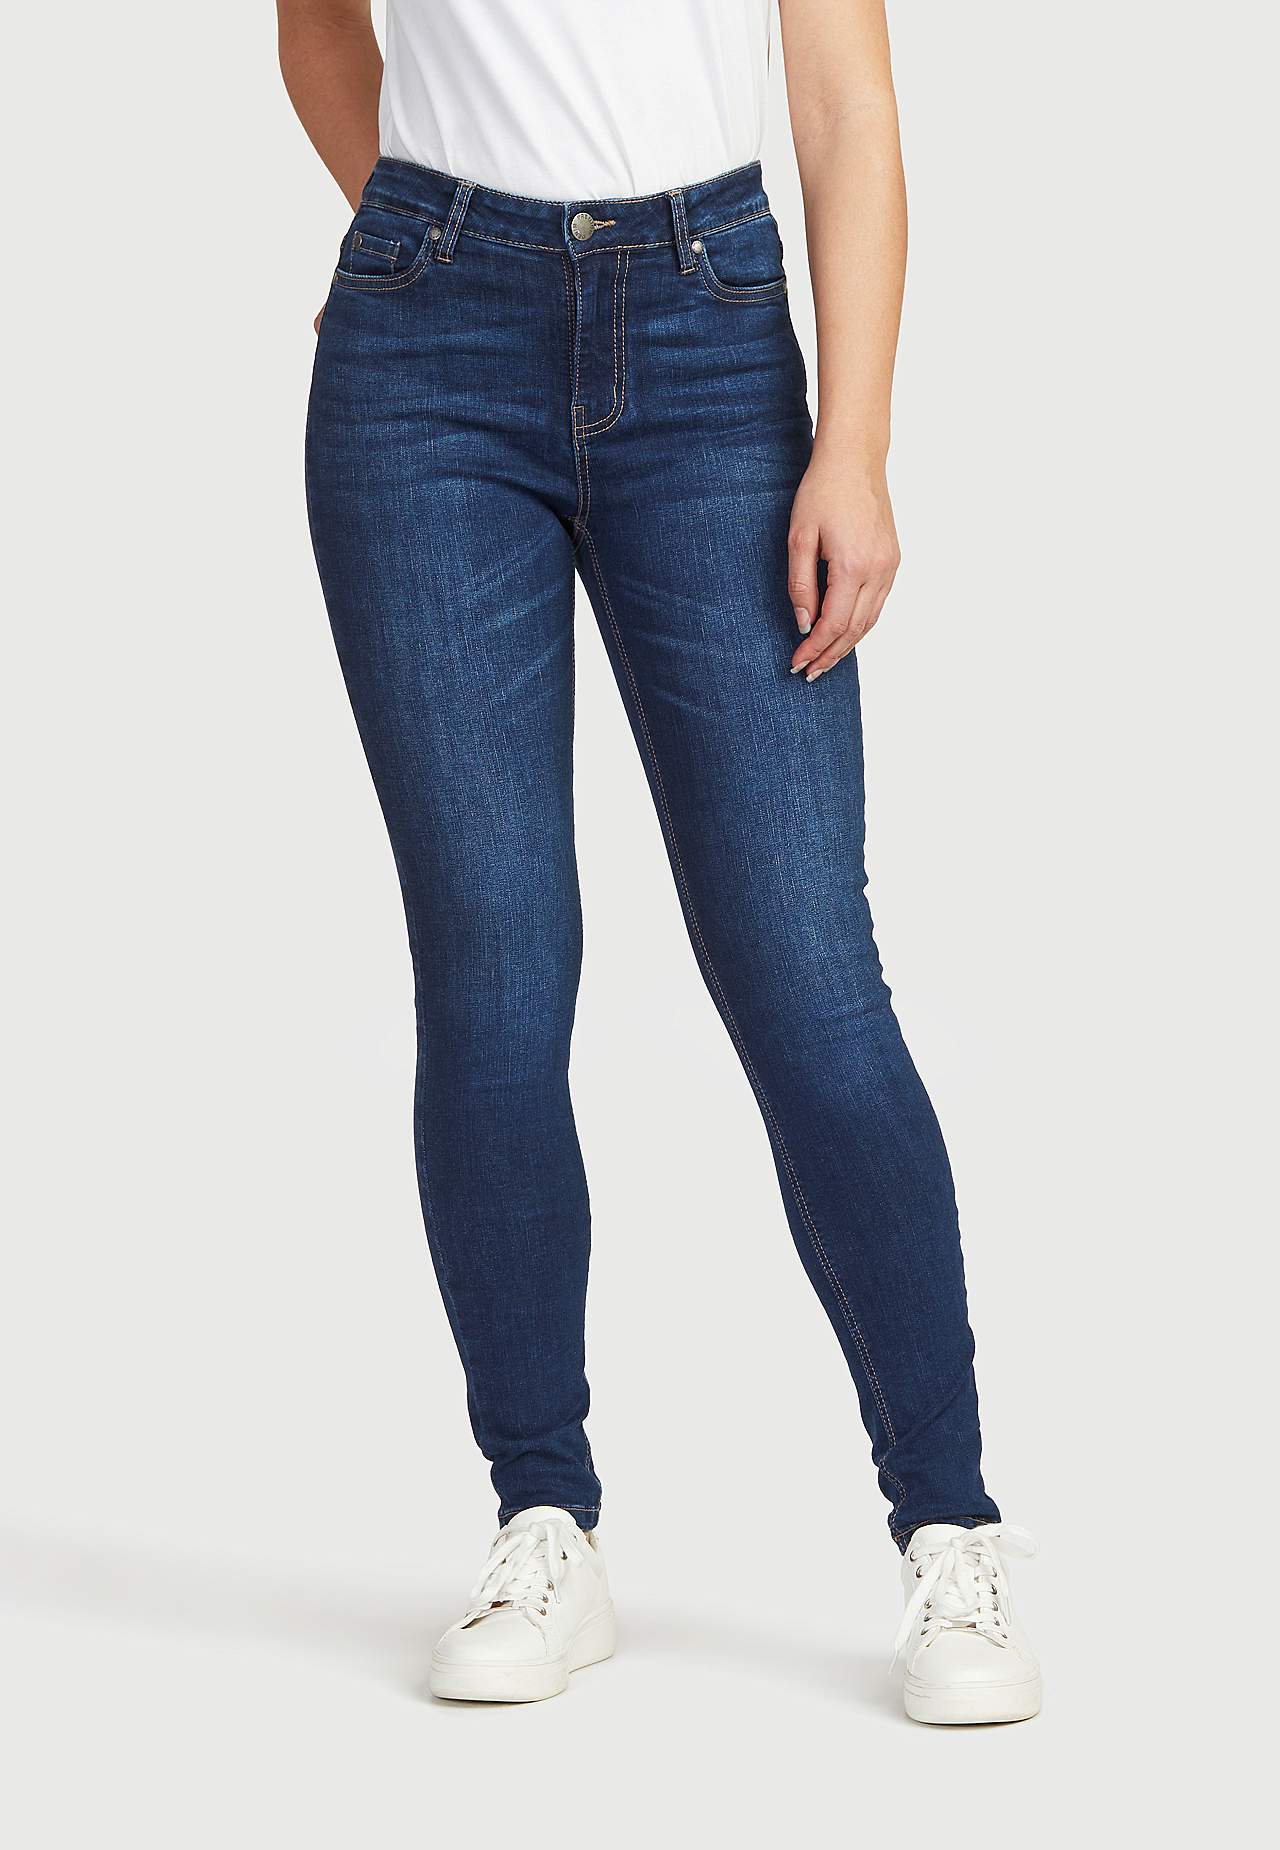 Superelastiske jeans Paris